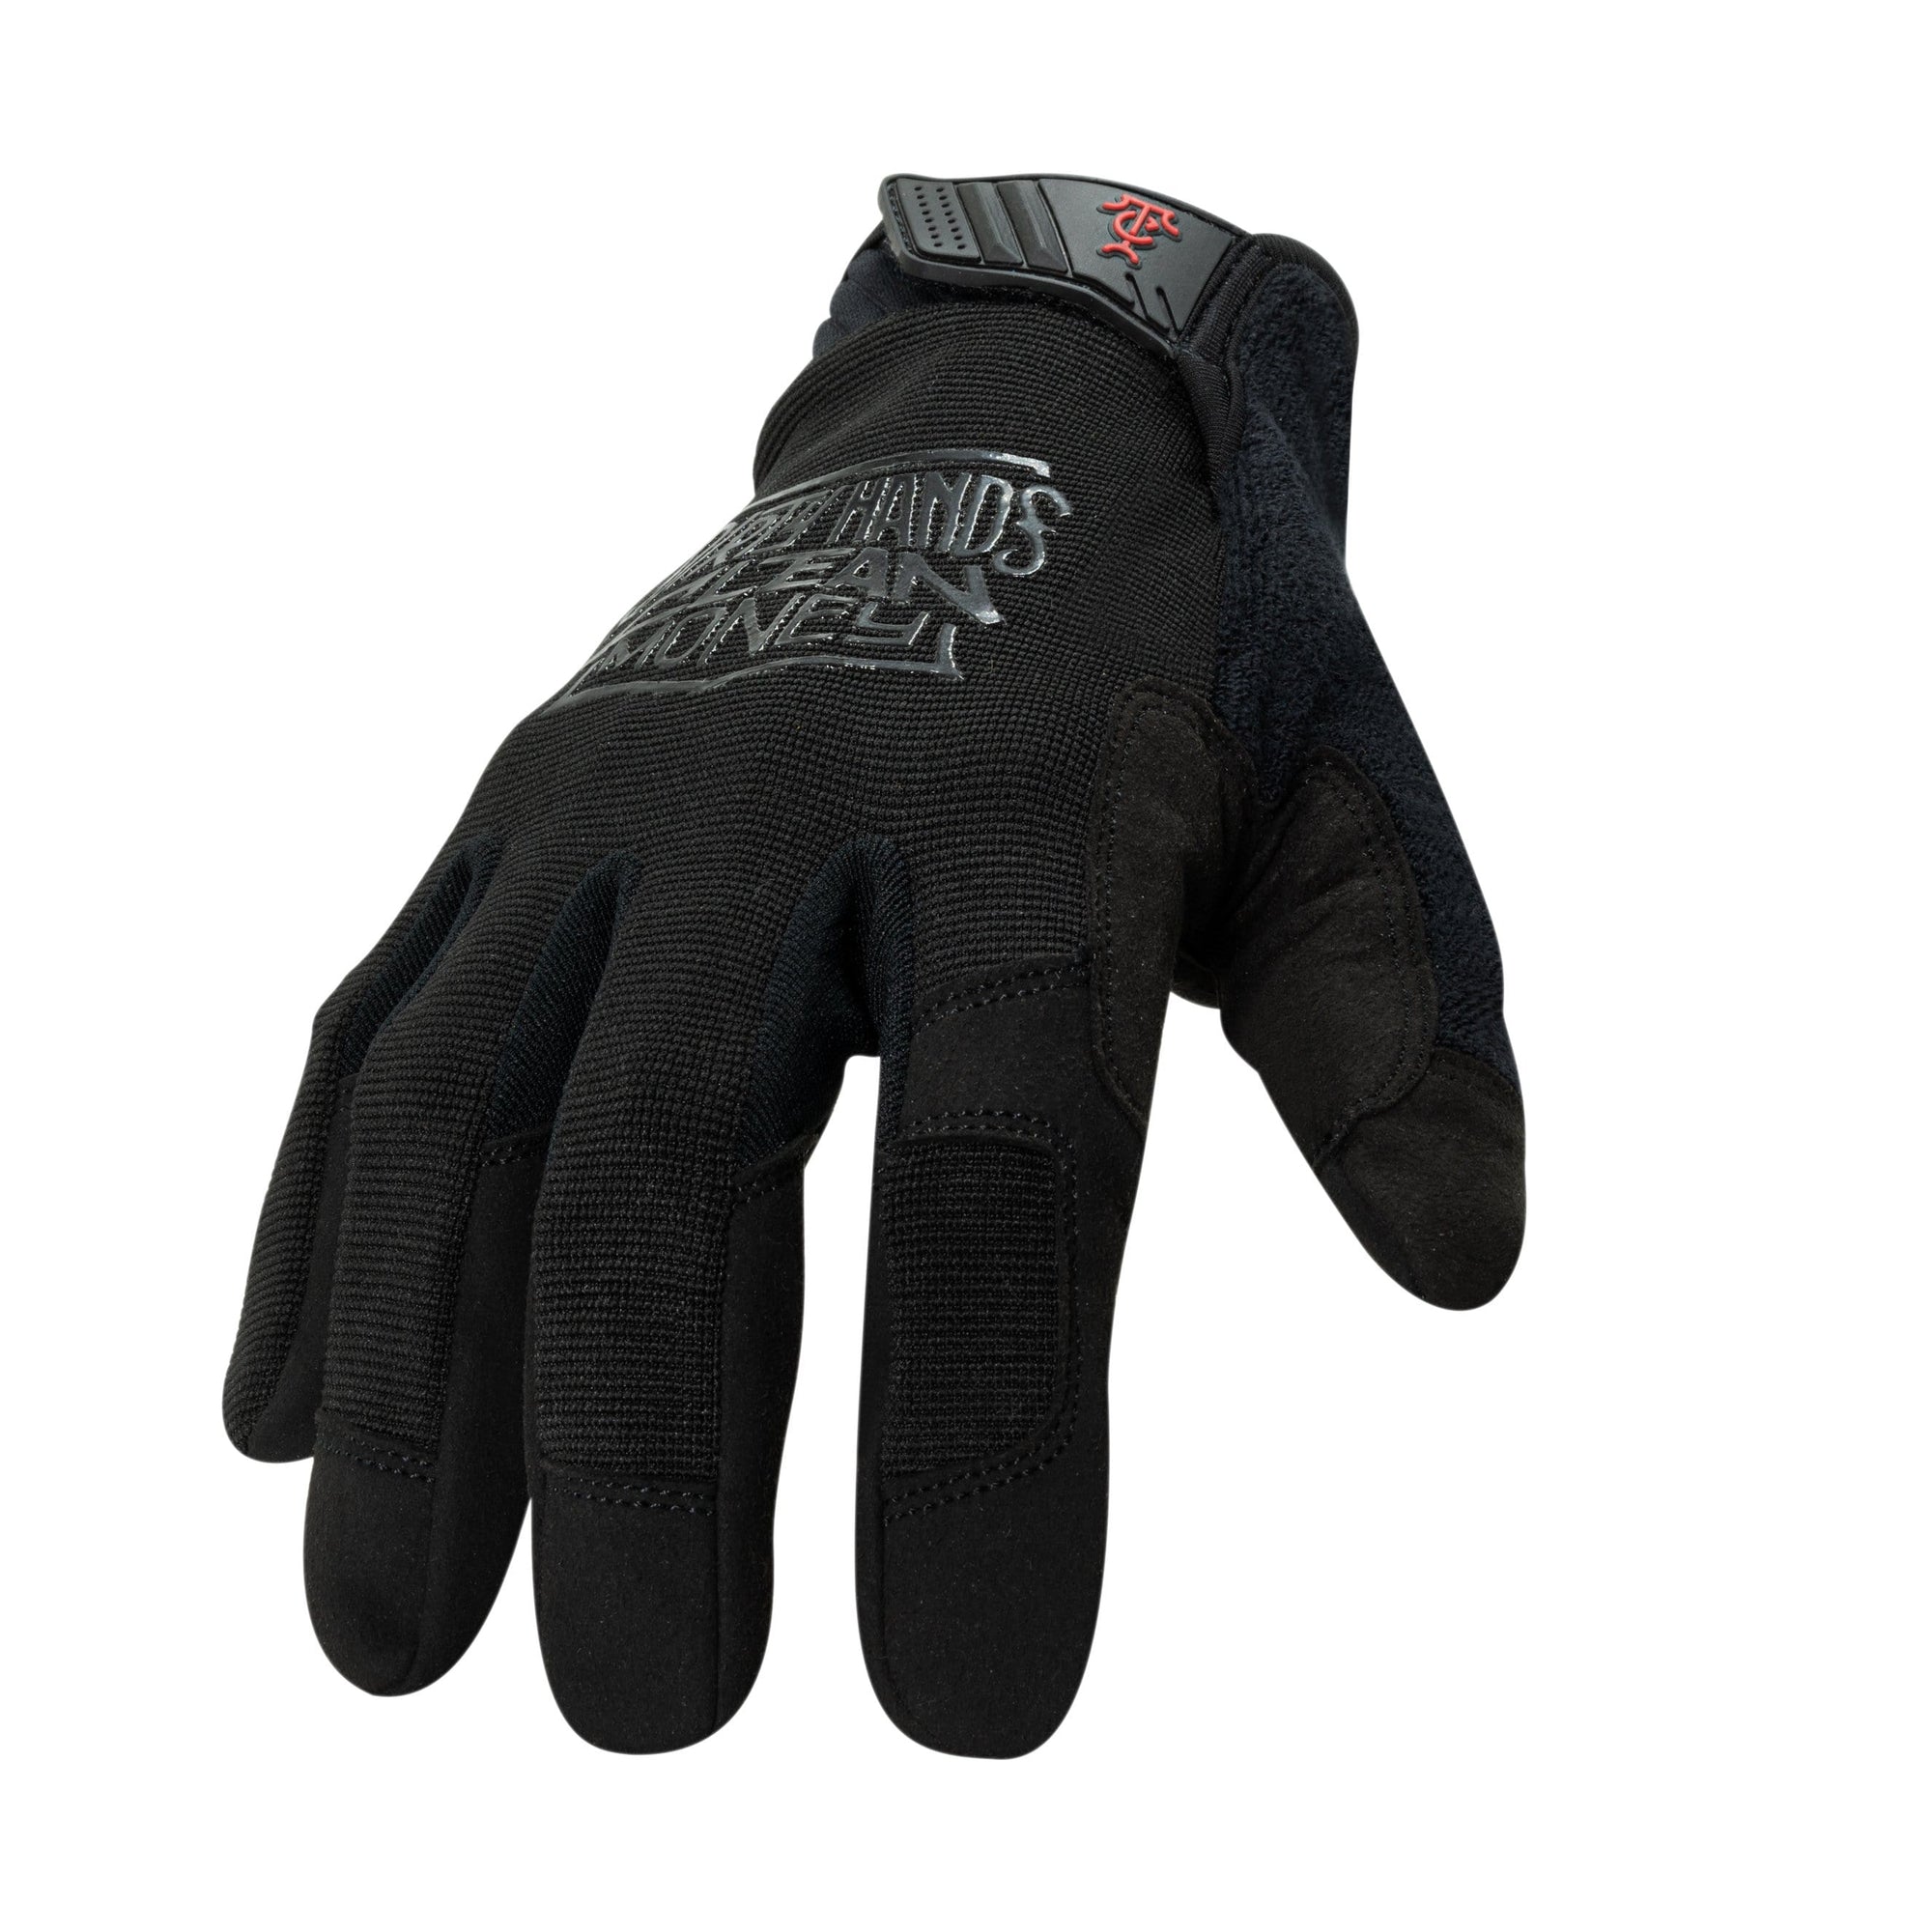 Mechanic Touch Screen Glove in Black